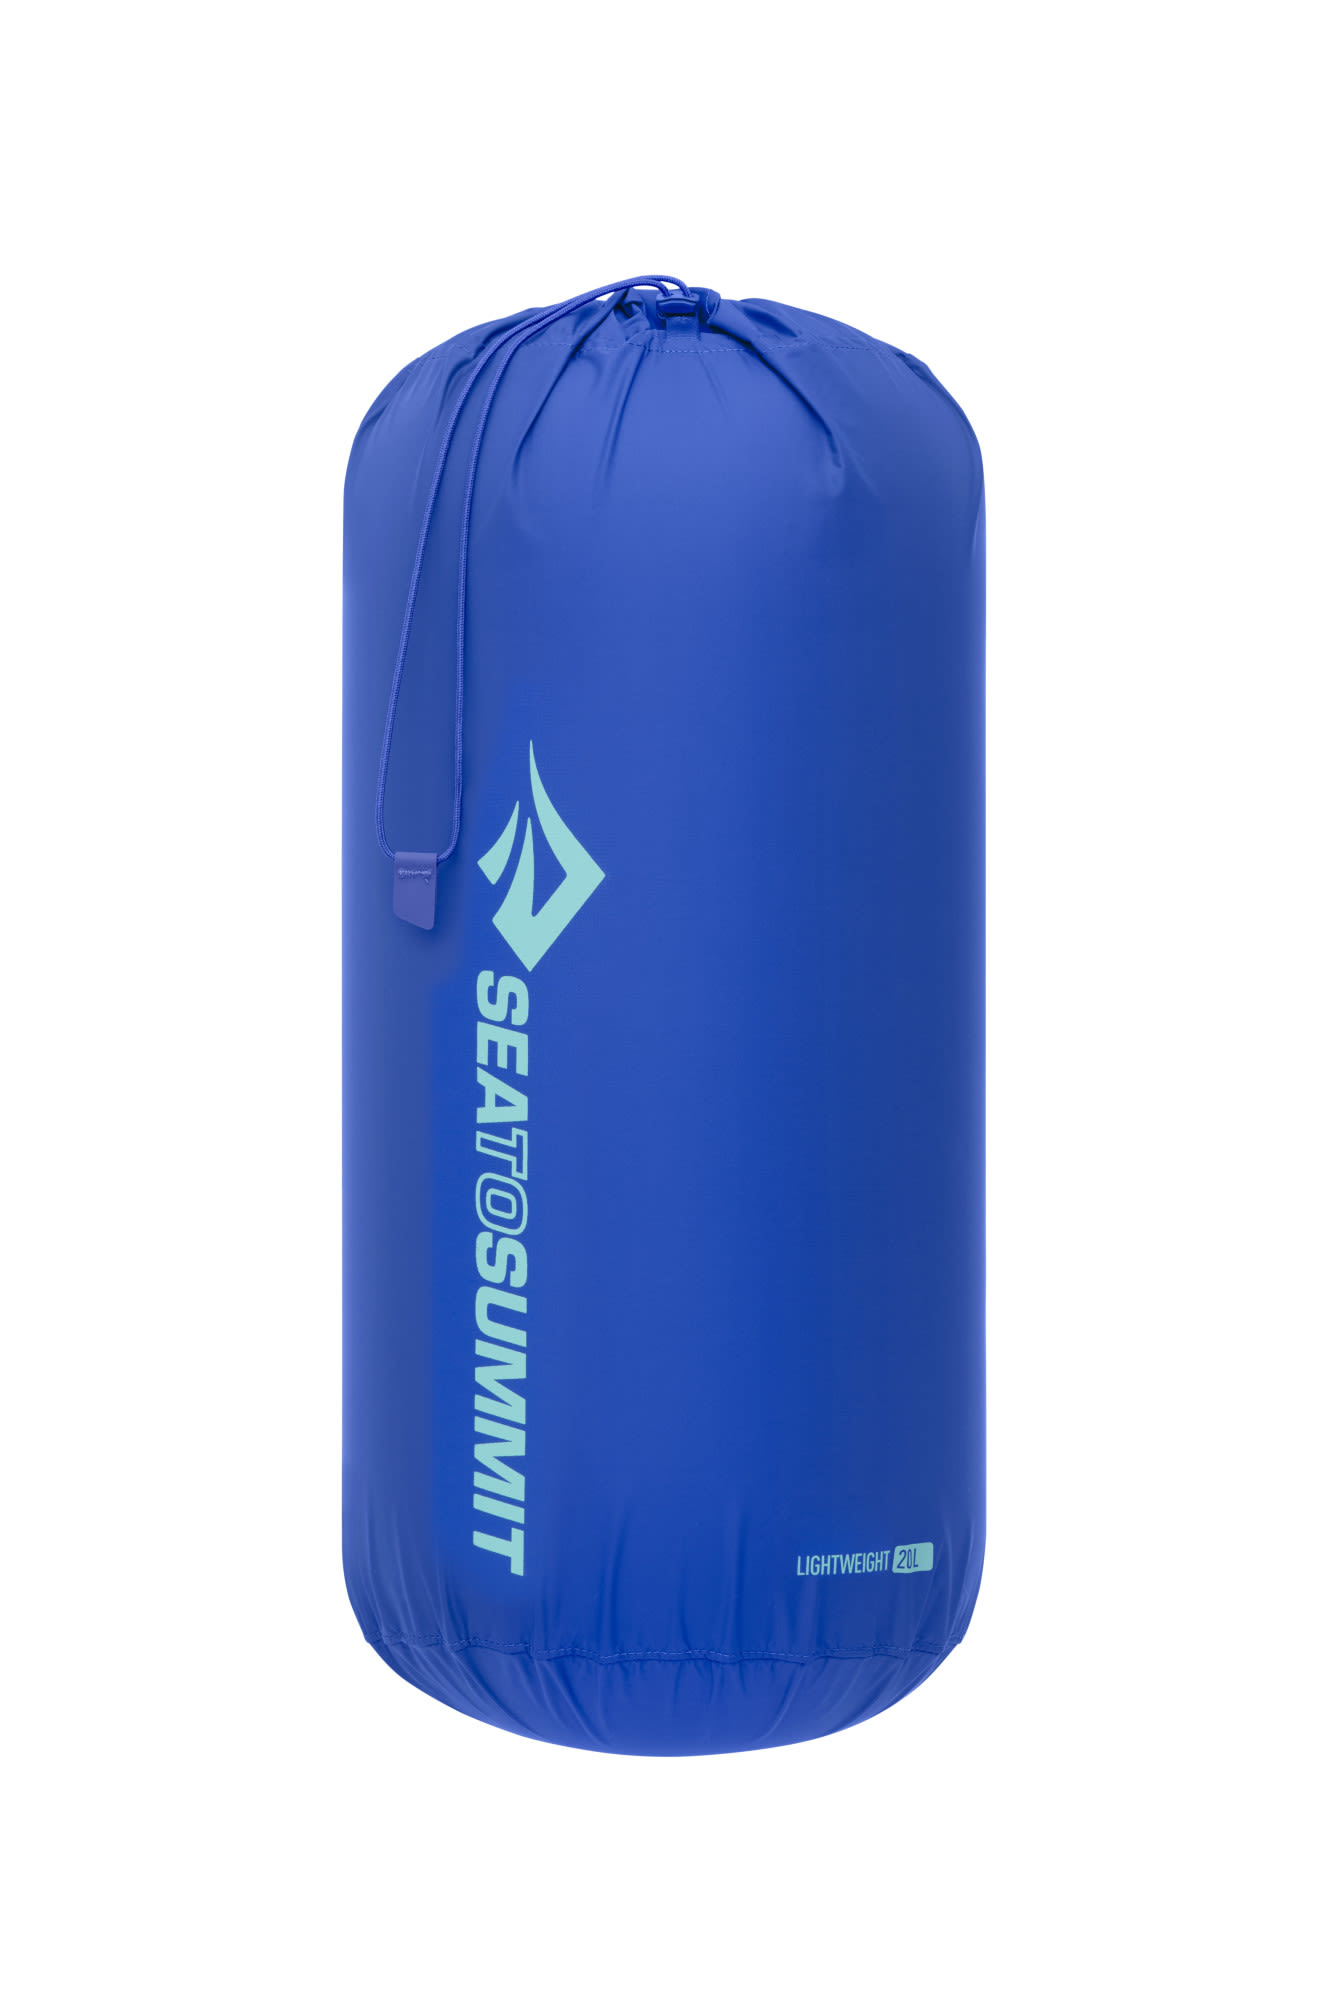 Sea To Summit Lightweight Stuff Sack 20l Blau |  Tasche